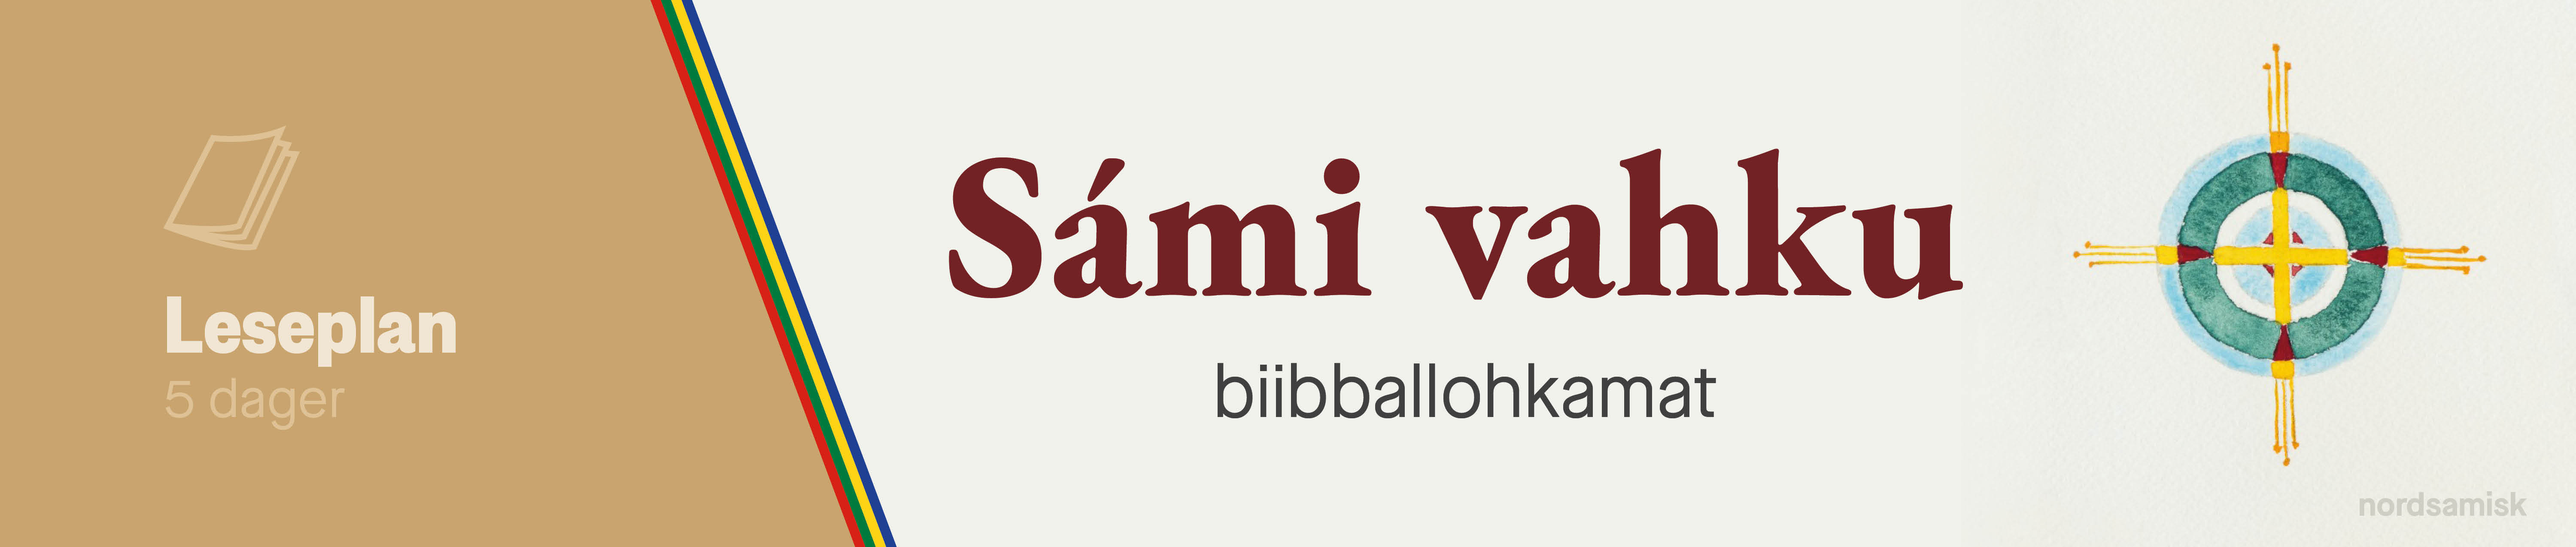 Bibelno Leseplan Samisk uke 3